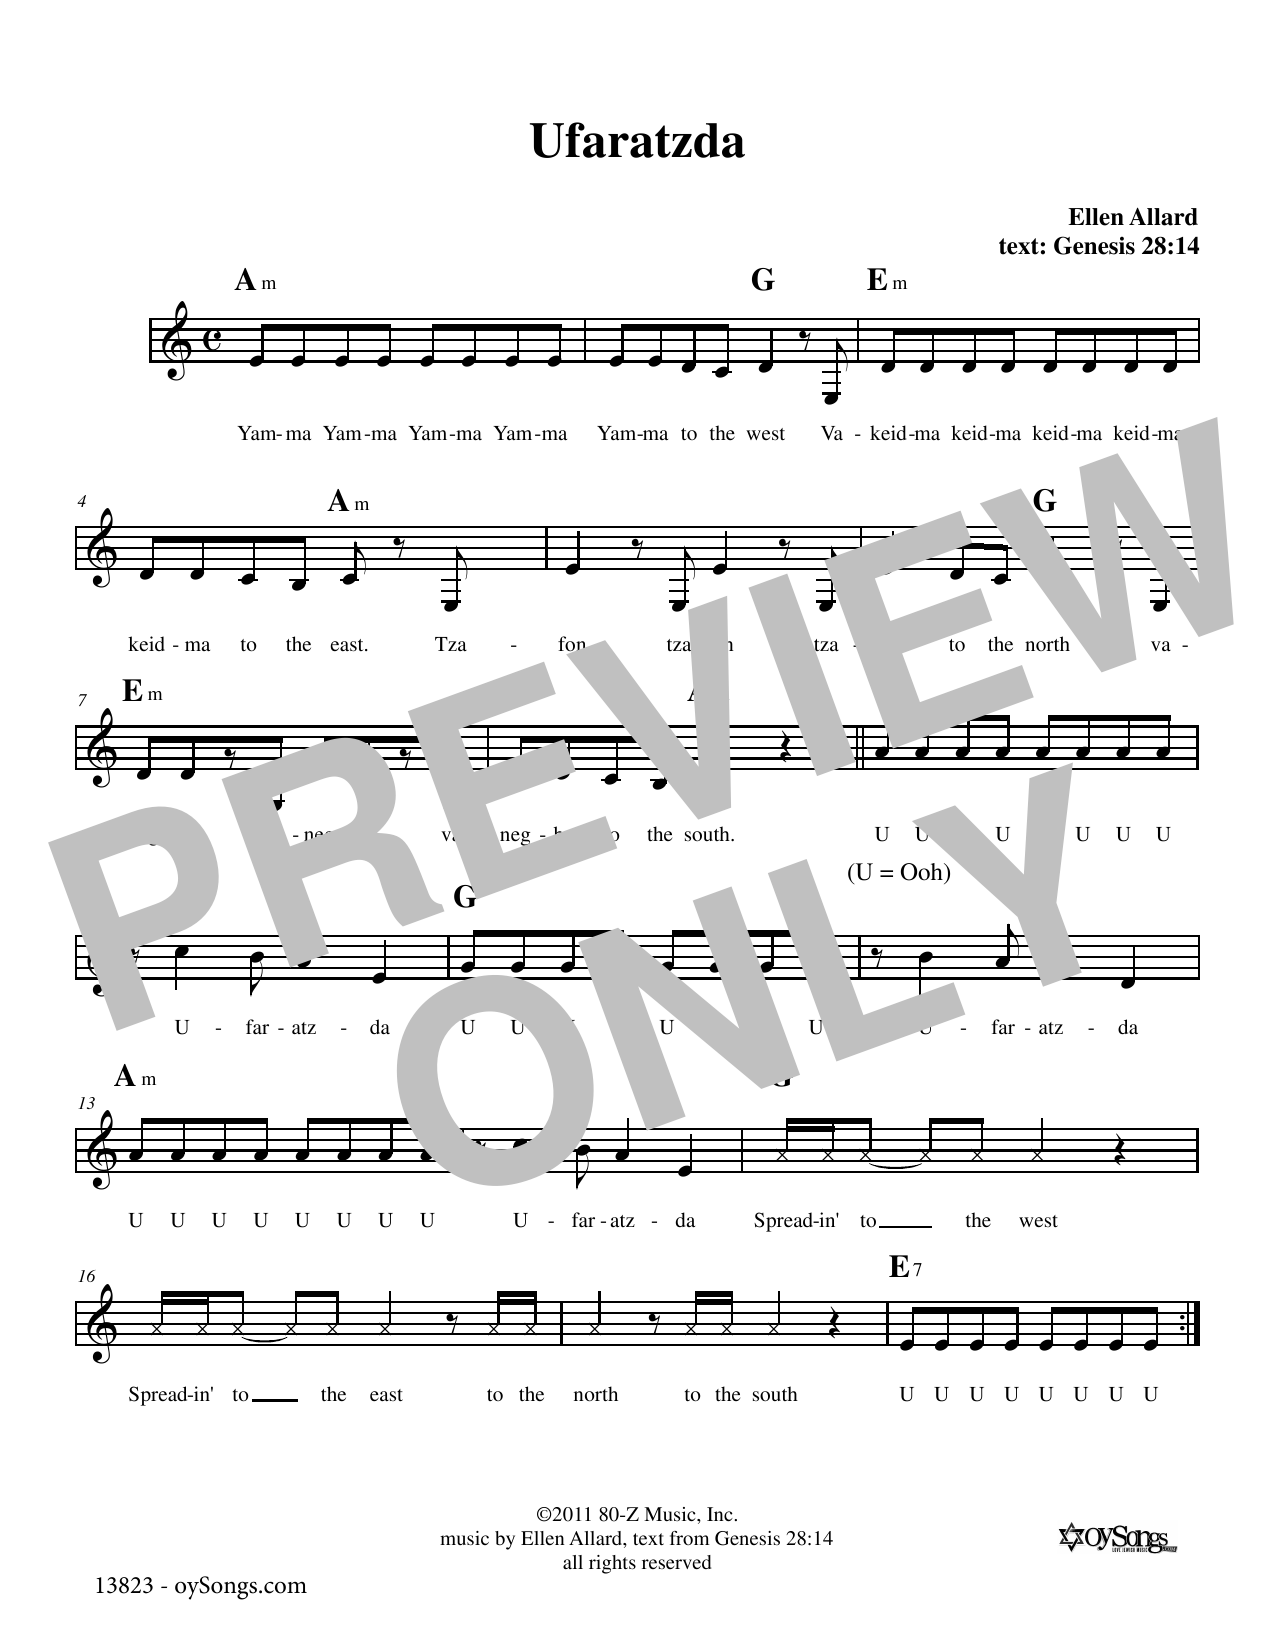 Ellen Allard Ufaratzda sheet music notes and chords arranged for Lead Sheet / Fake Book